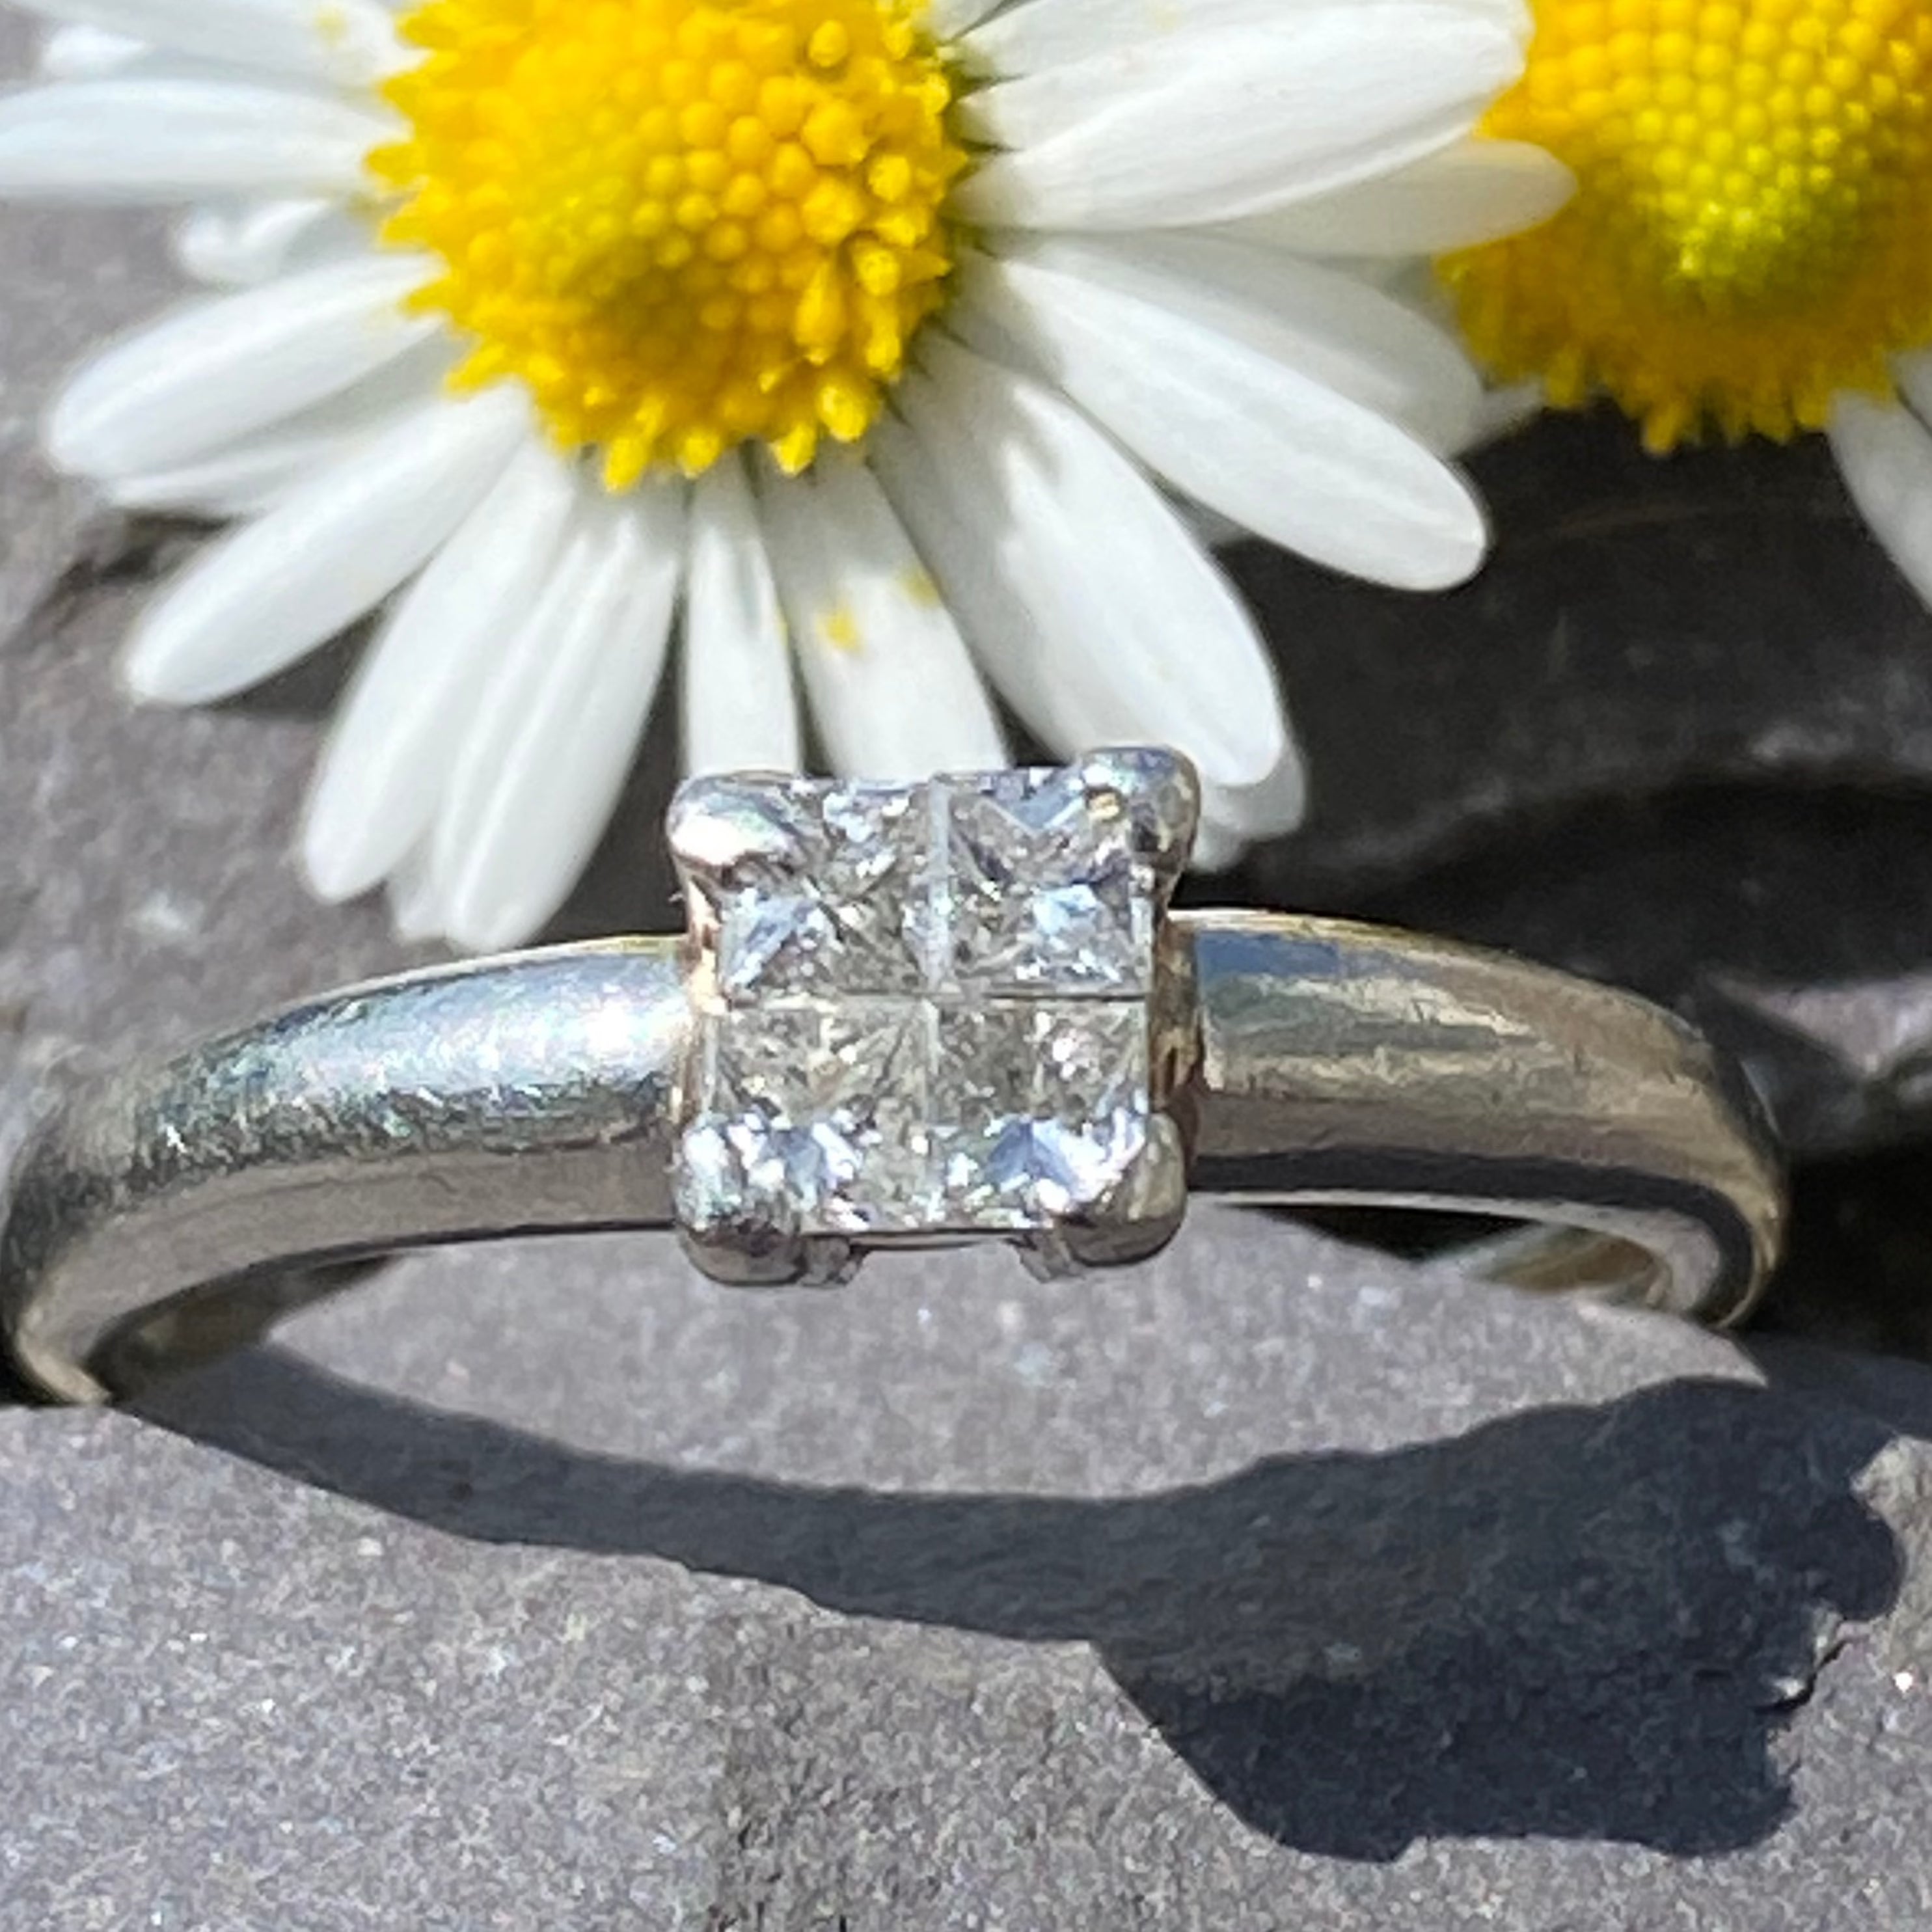 Platinum Princess Cut Diamond Cluster Ring Size J 1/2 or 5 USA.